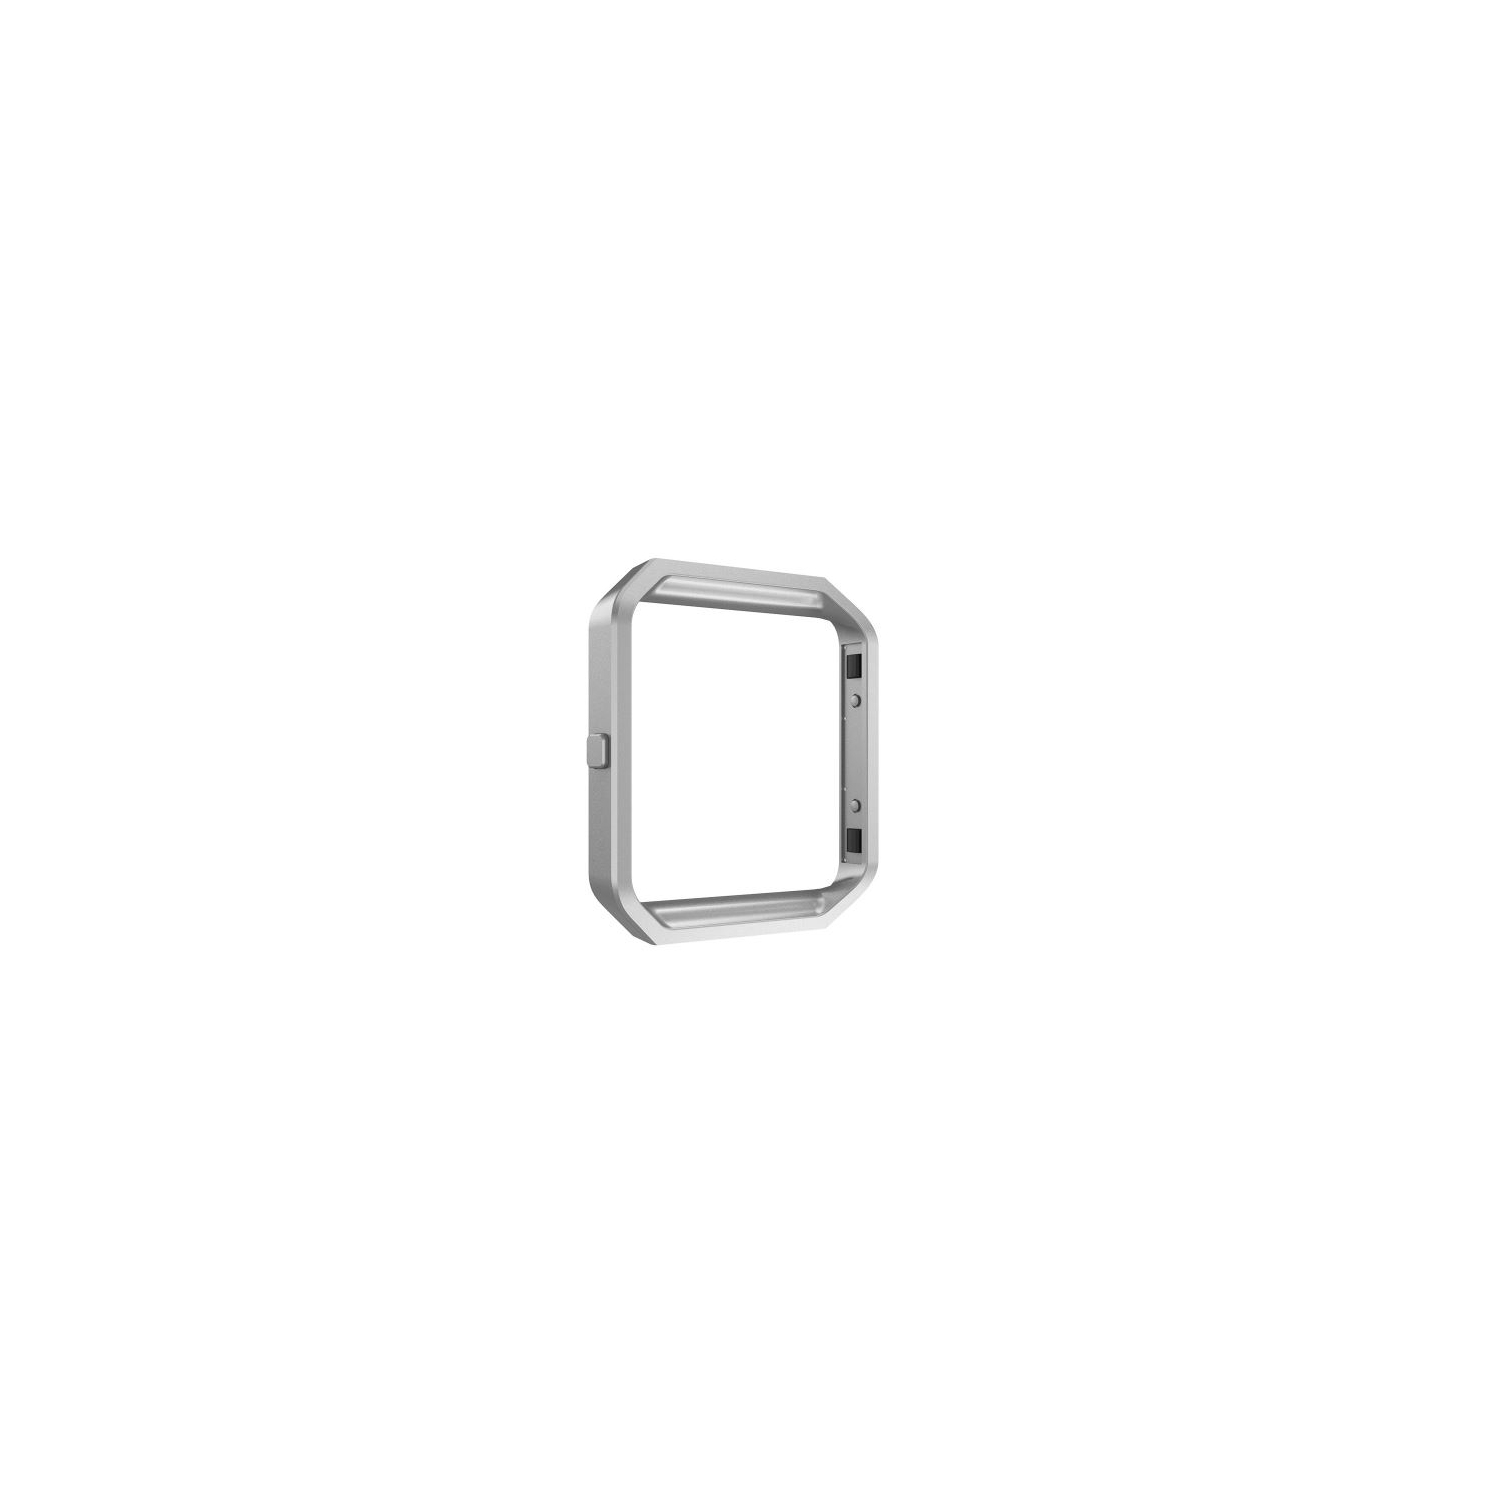 Adreama Frame for Fitbit Blaze - Silver